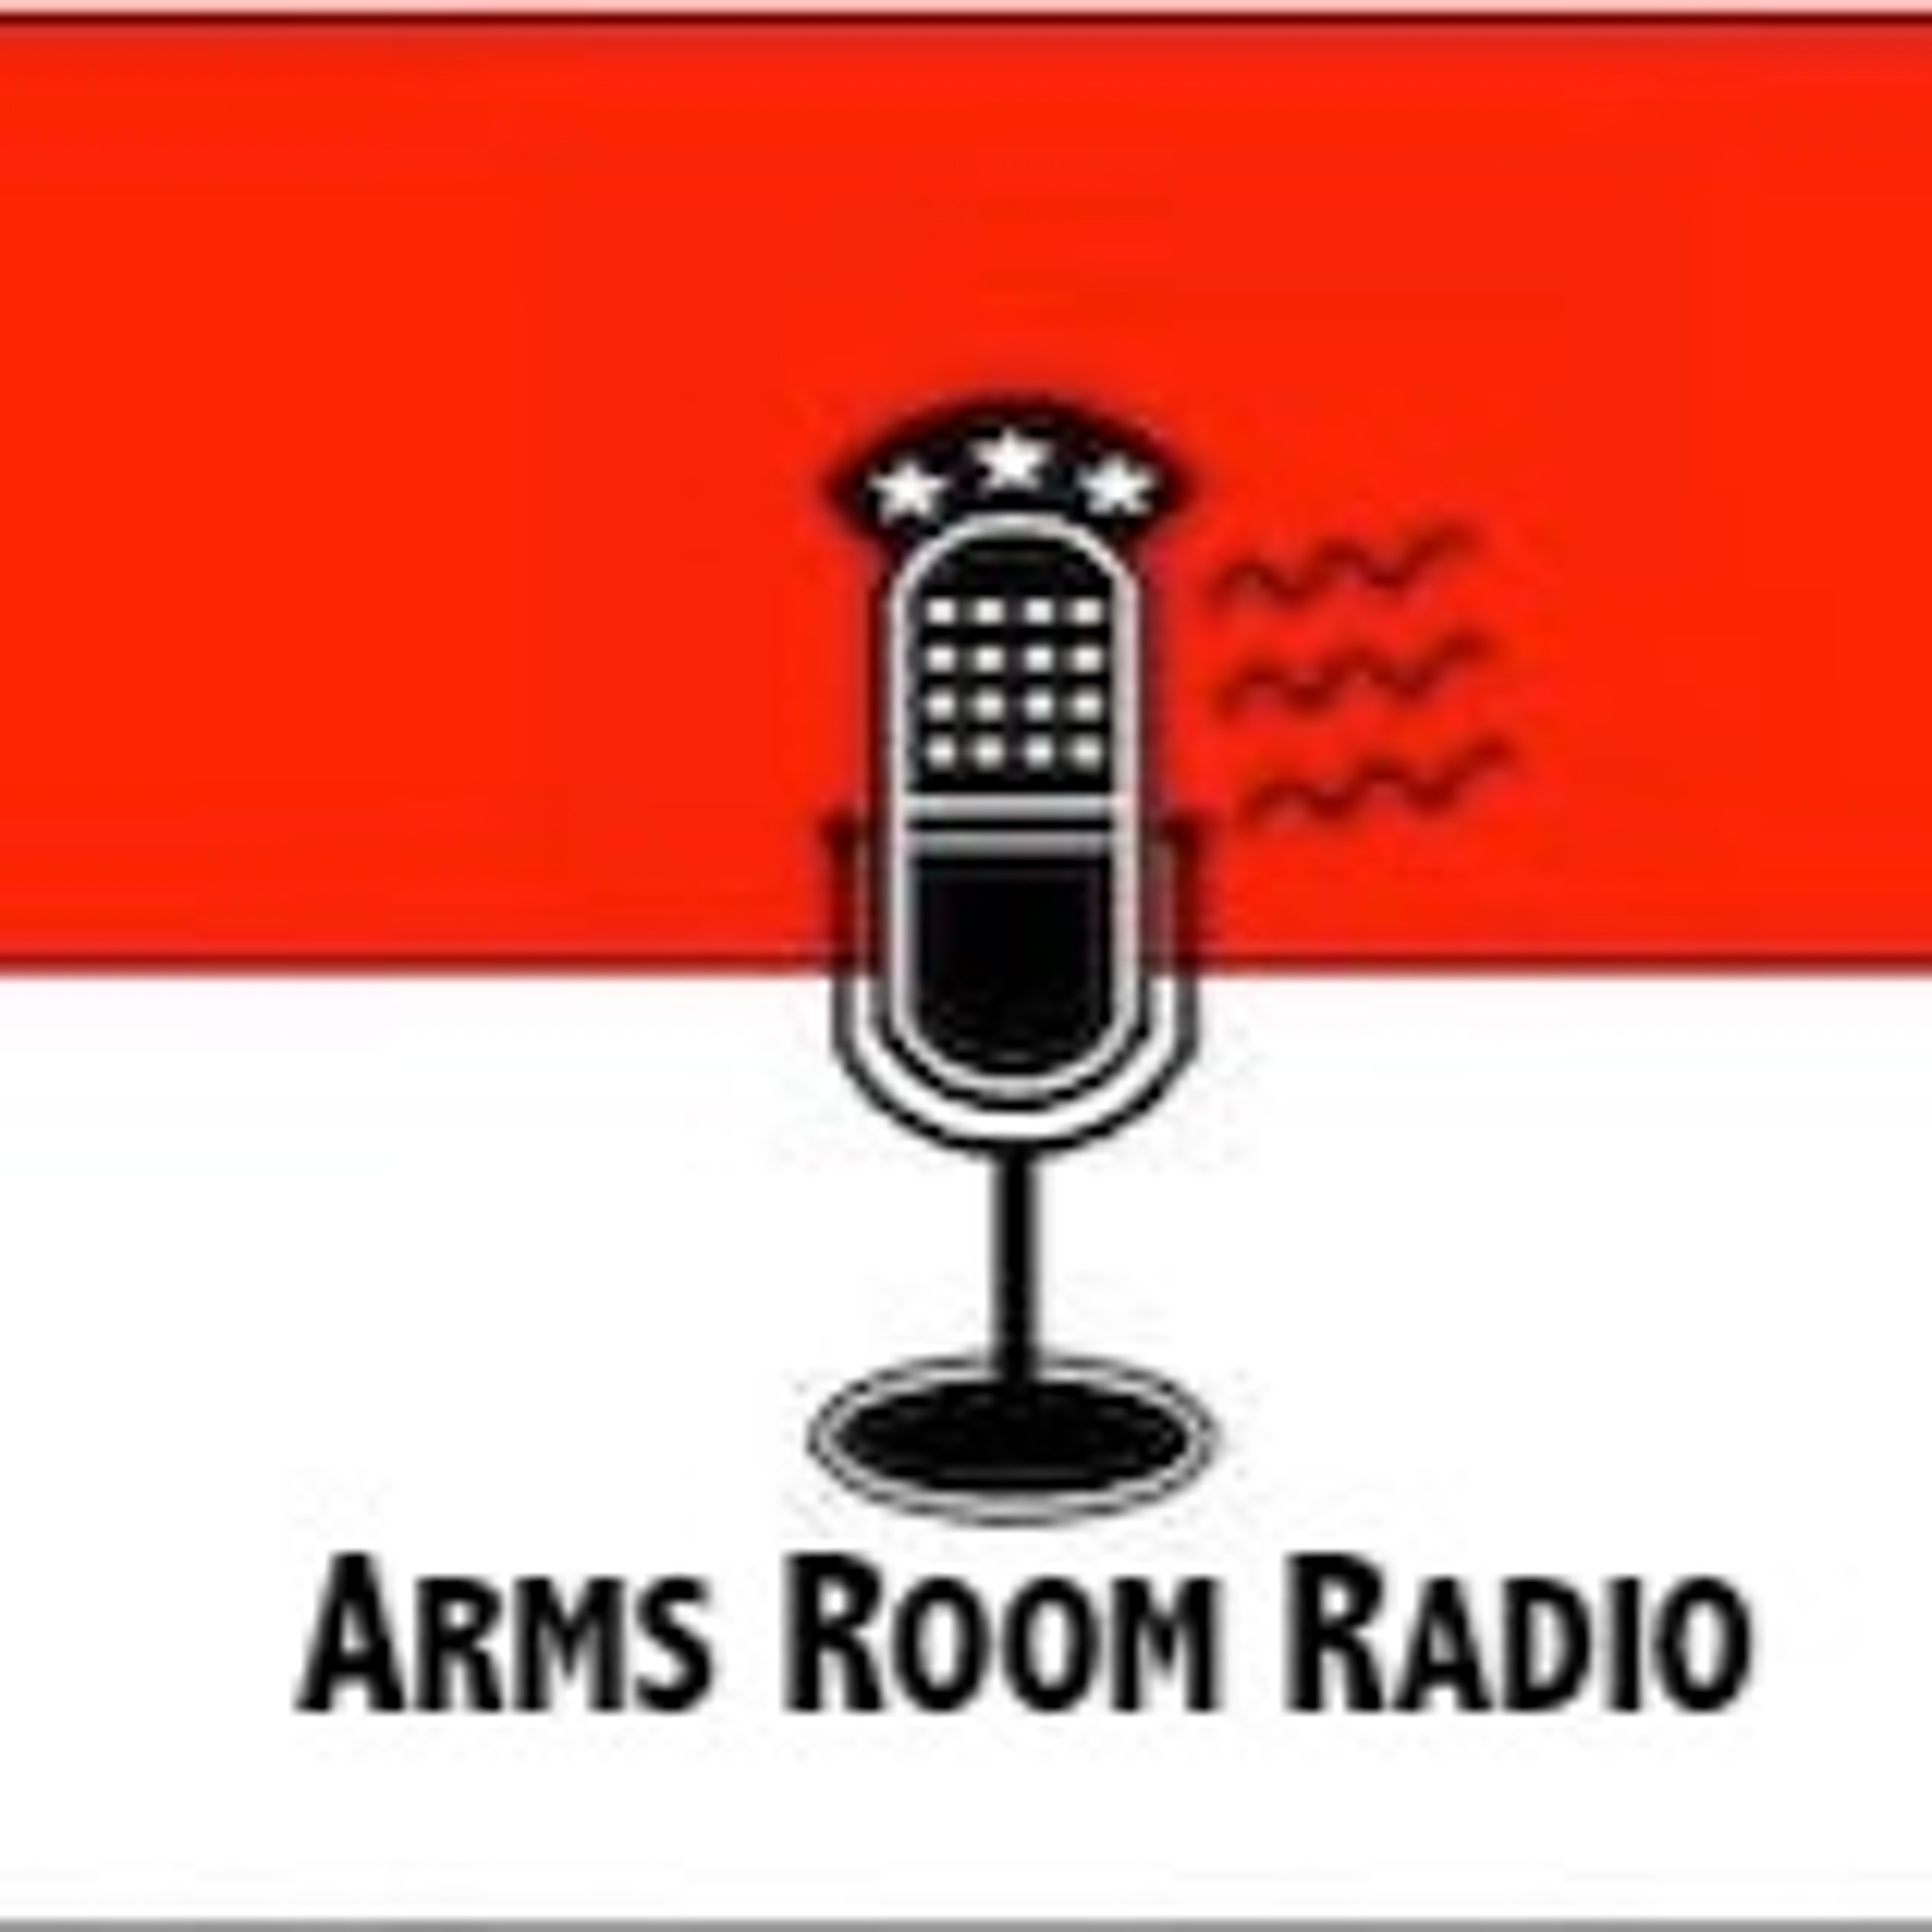 ArmsRoomRadio 07.03.21 Patrick Collins and San Jose gun laws